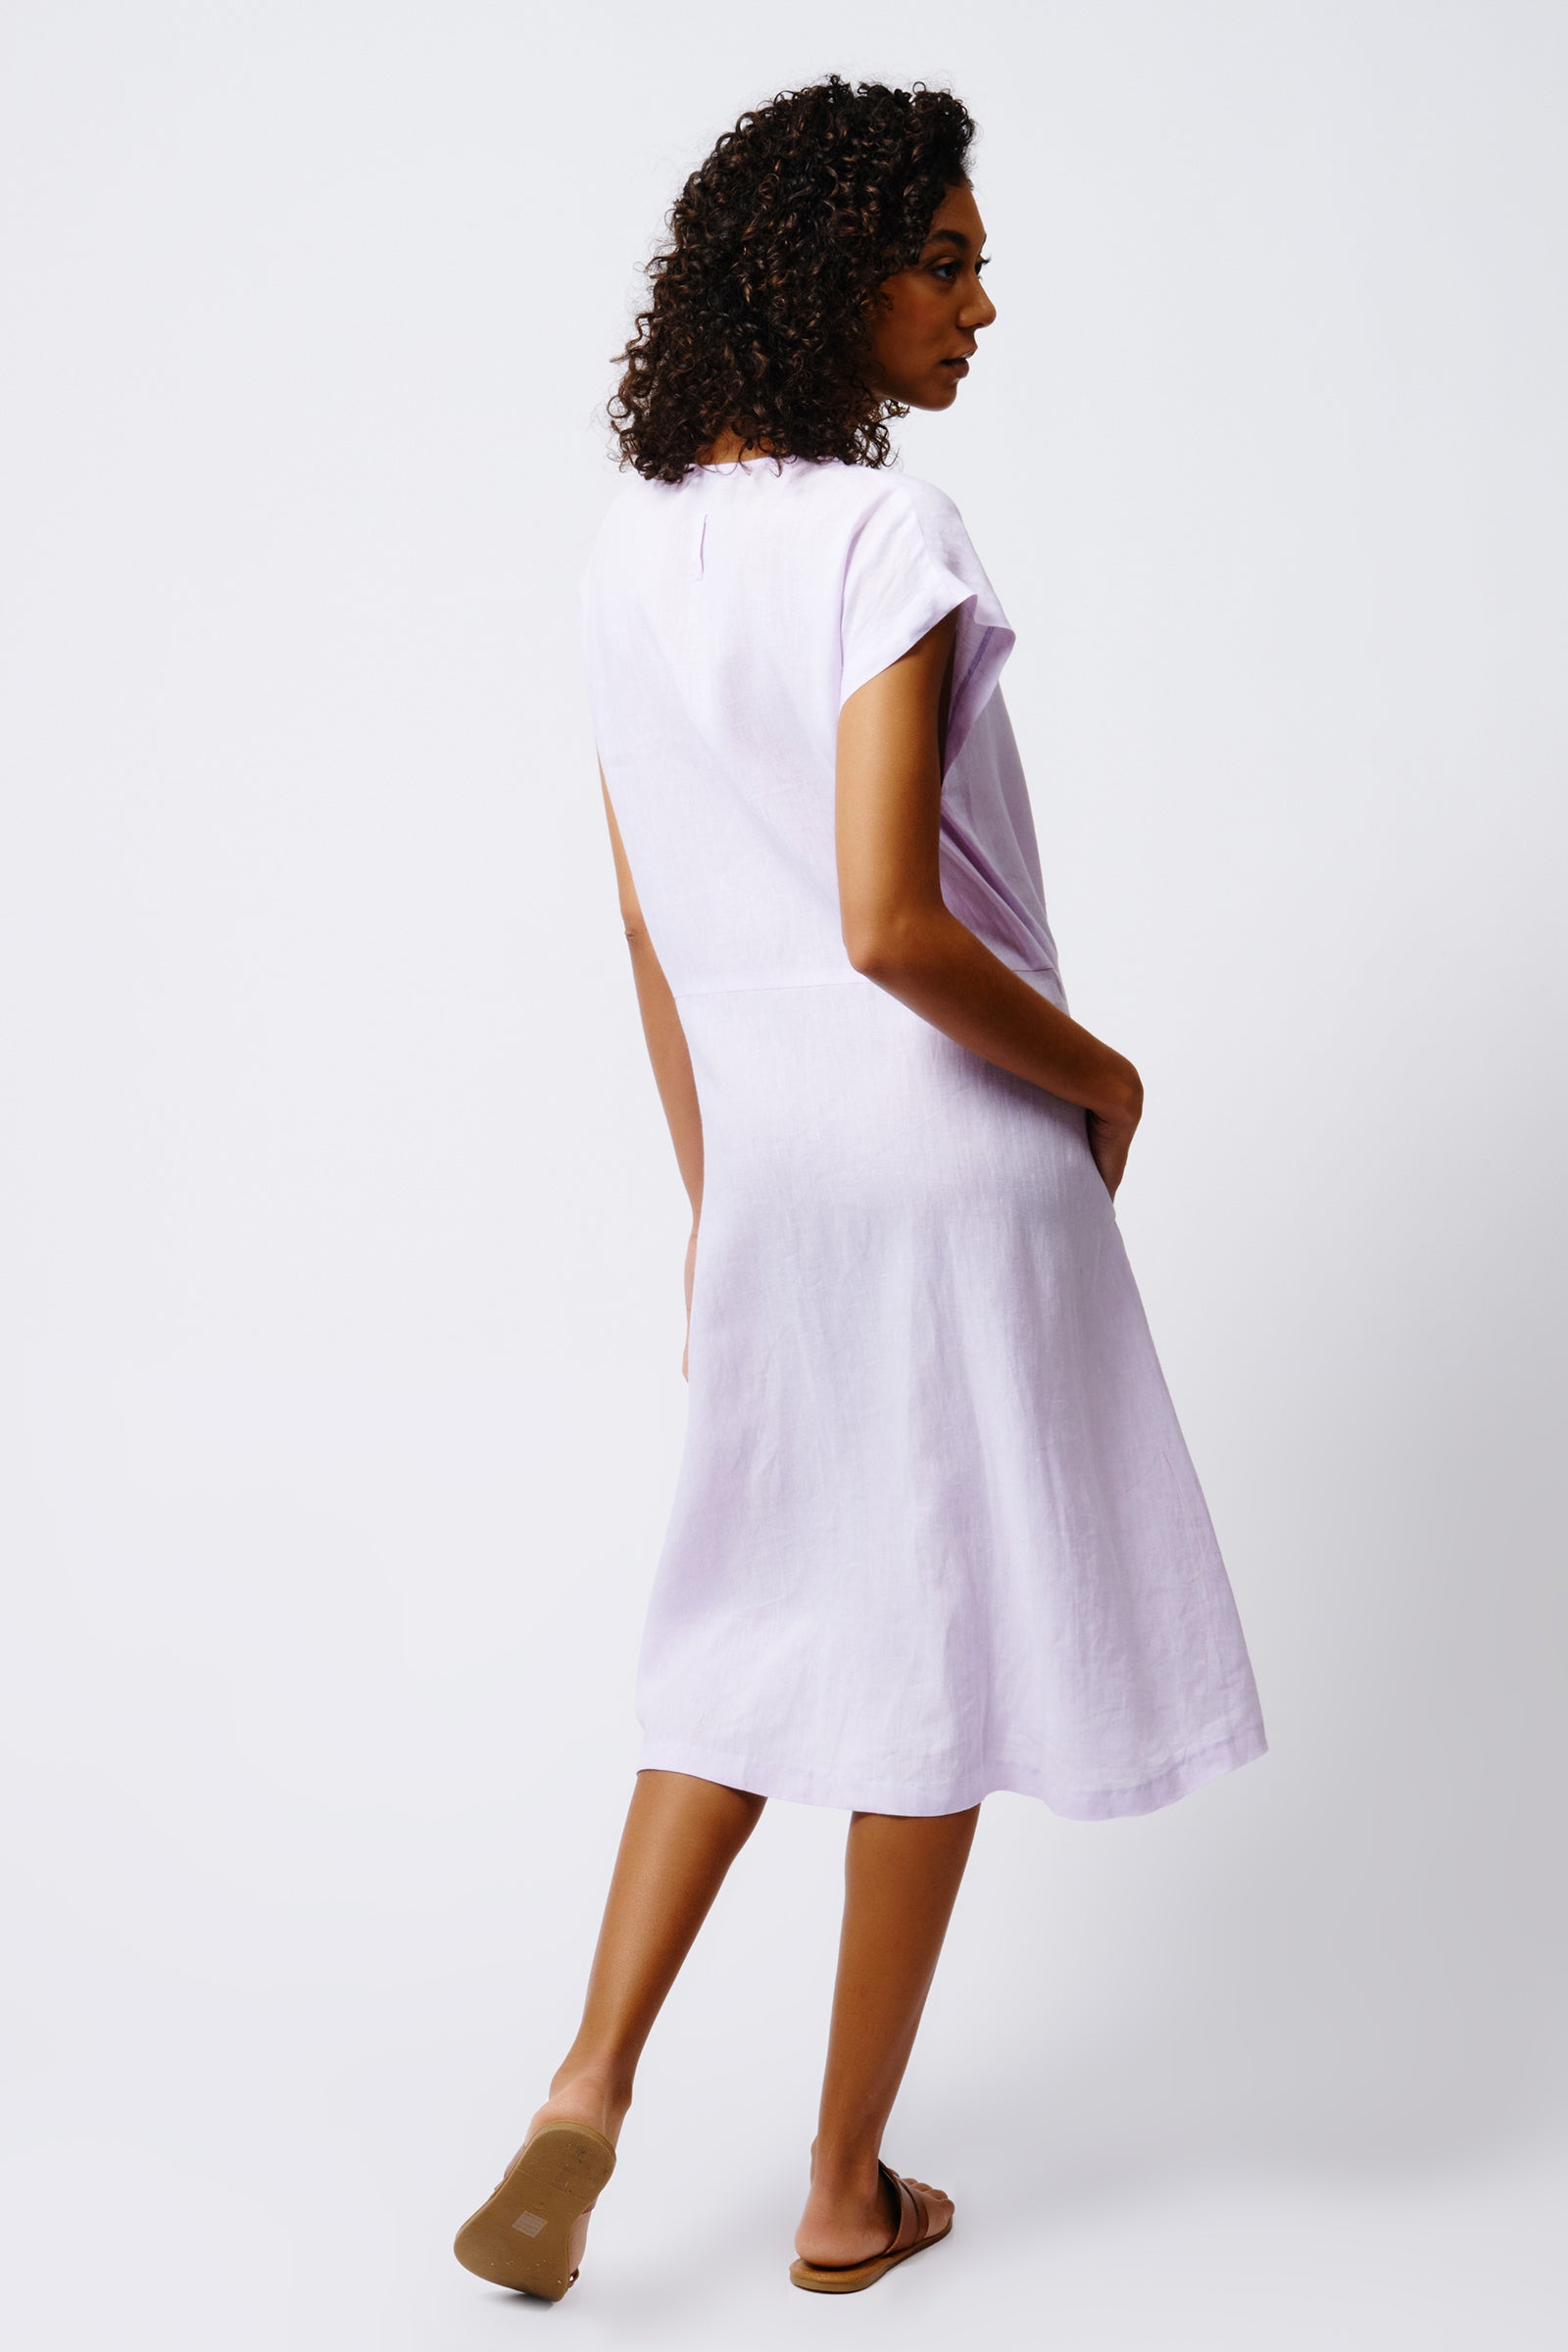 Kal Rieman Harlow Cap Sleeve Dress in Lavender Linen on Model Front View Full